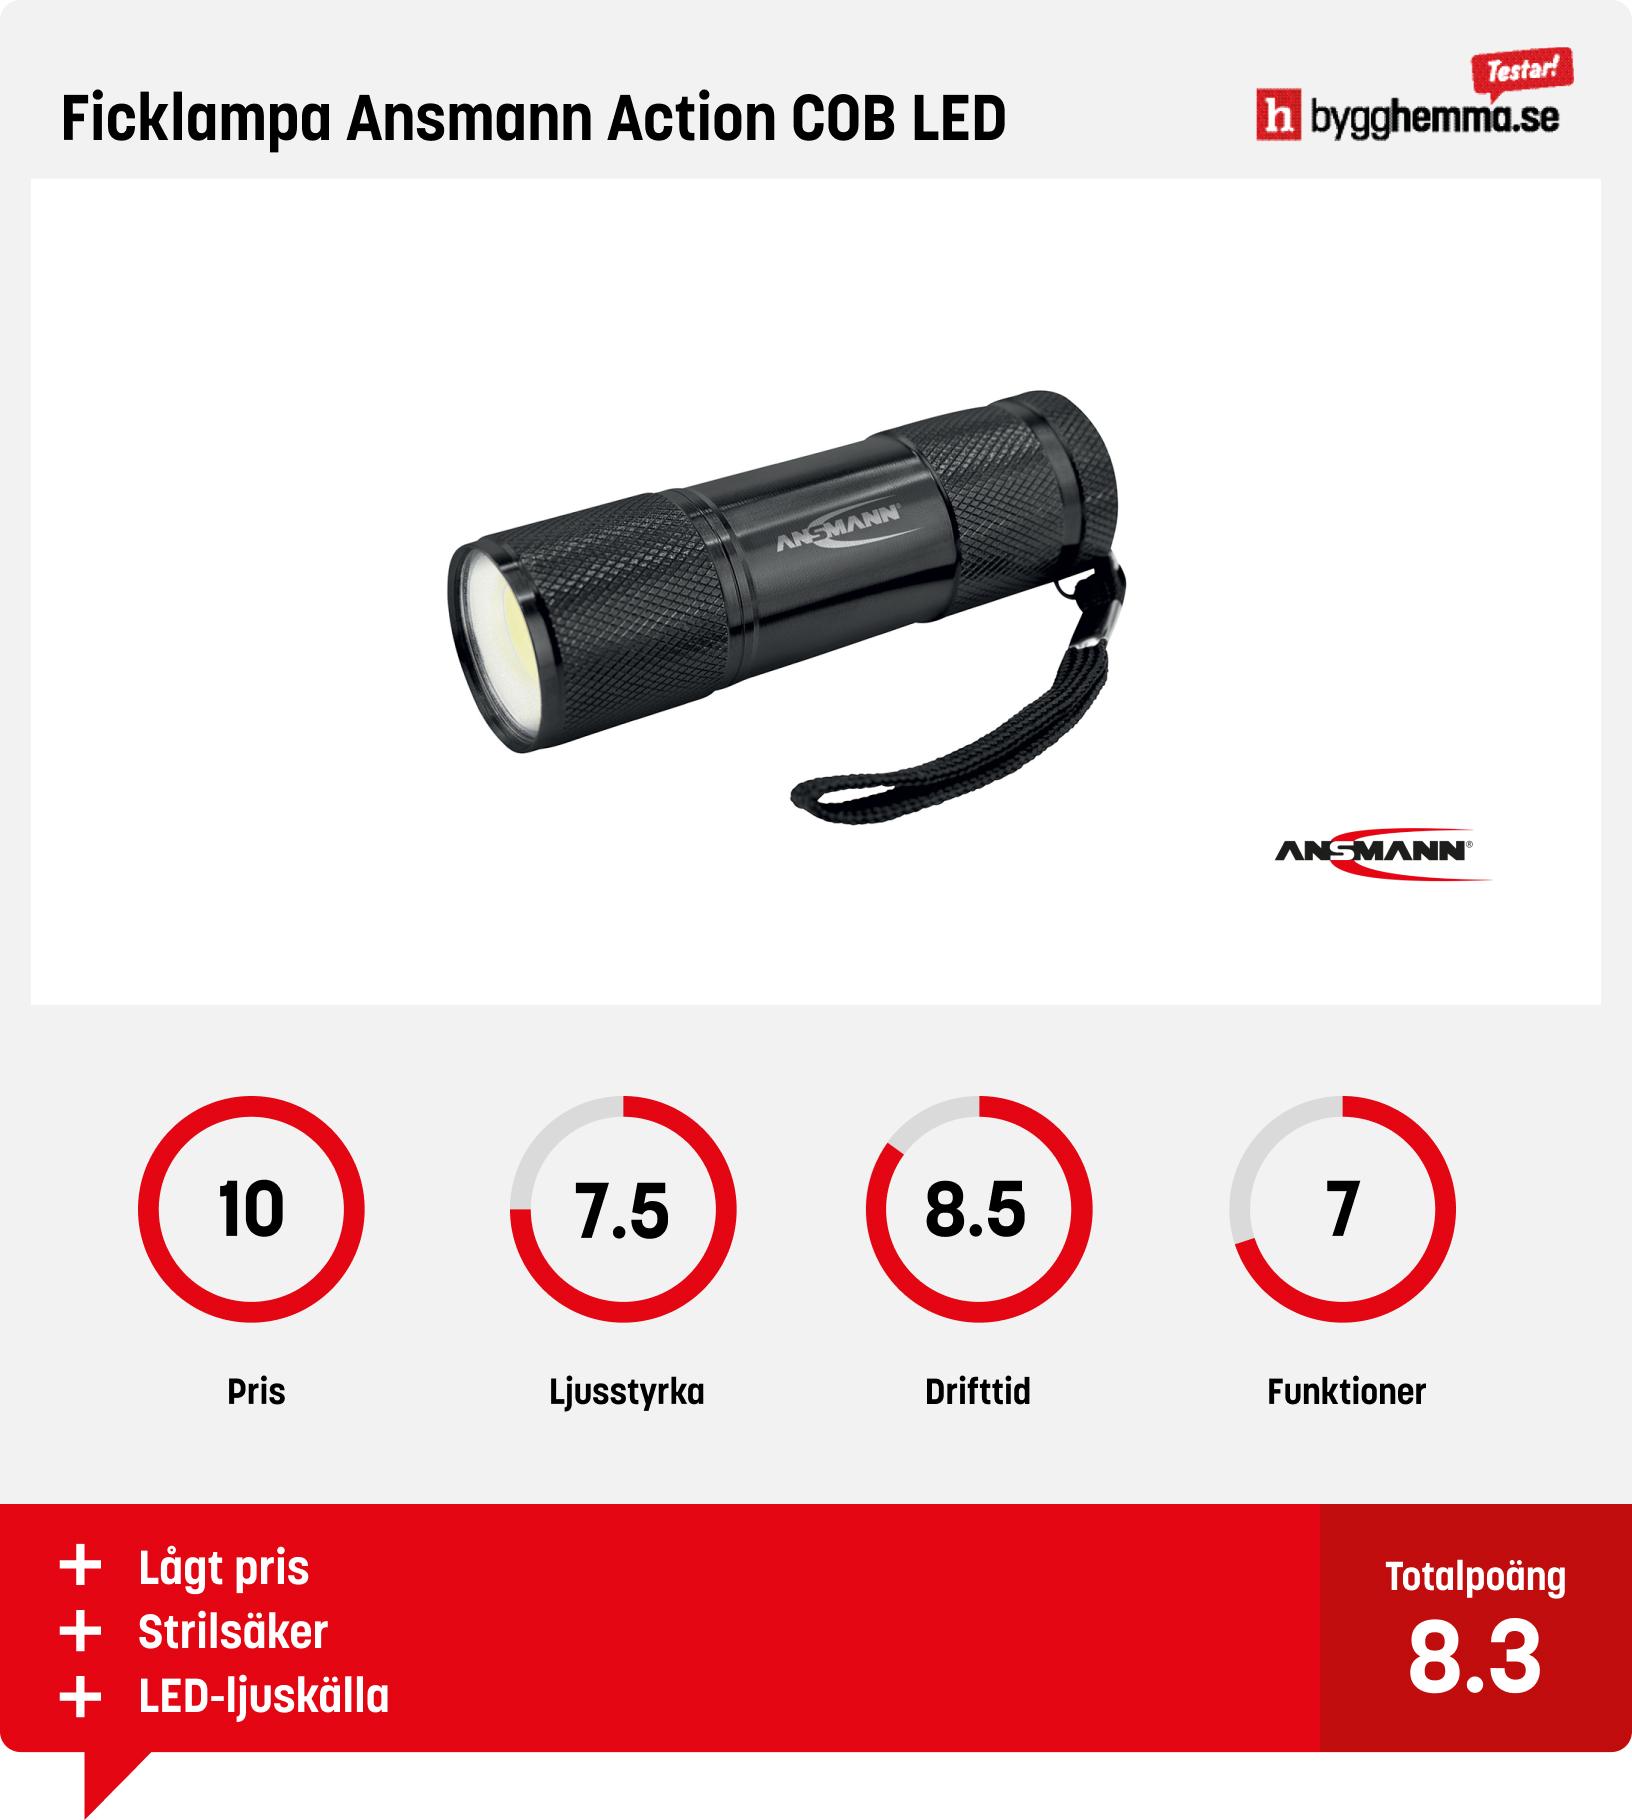 Bästa ficklampa - Ficklampa Ansmann Action COB LED